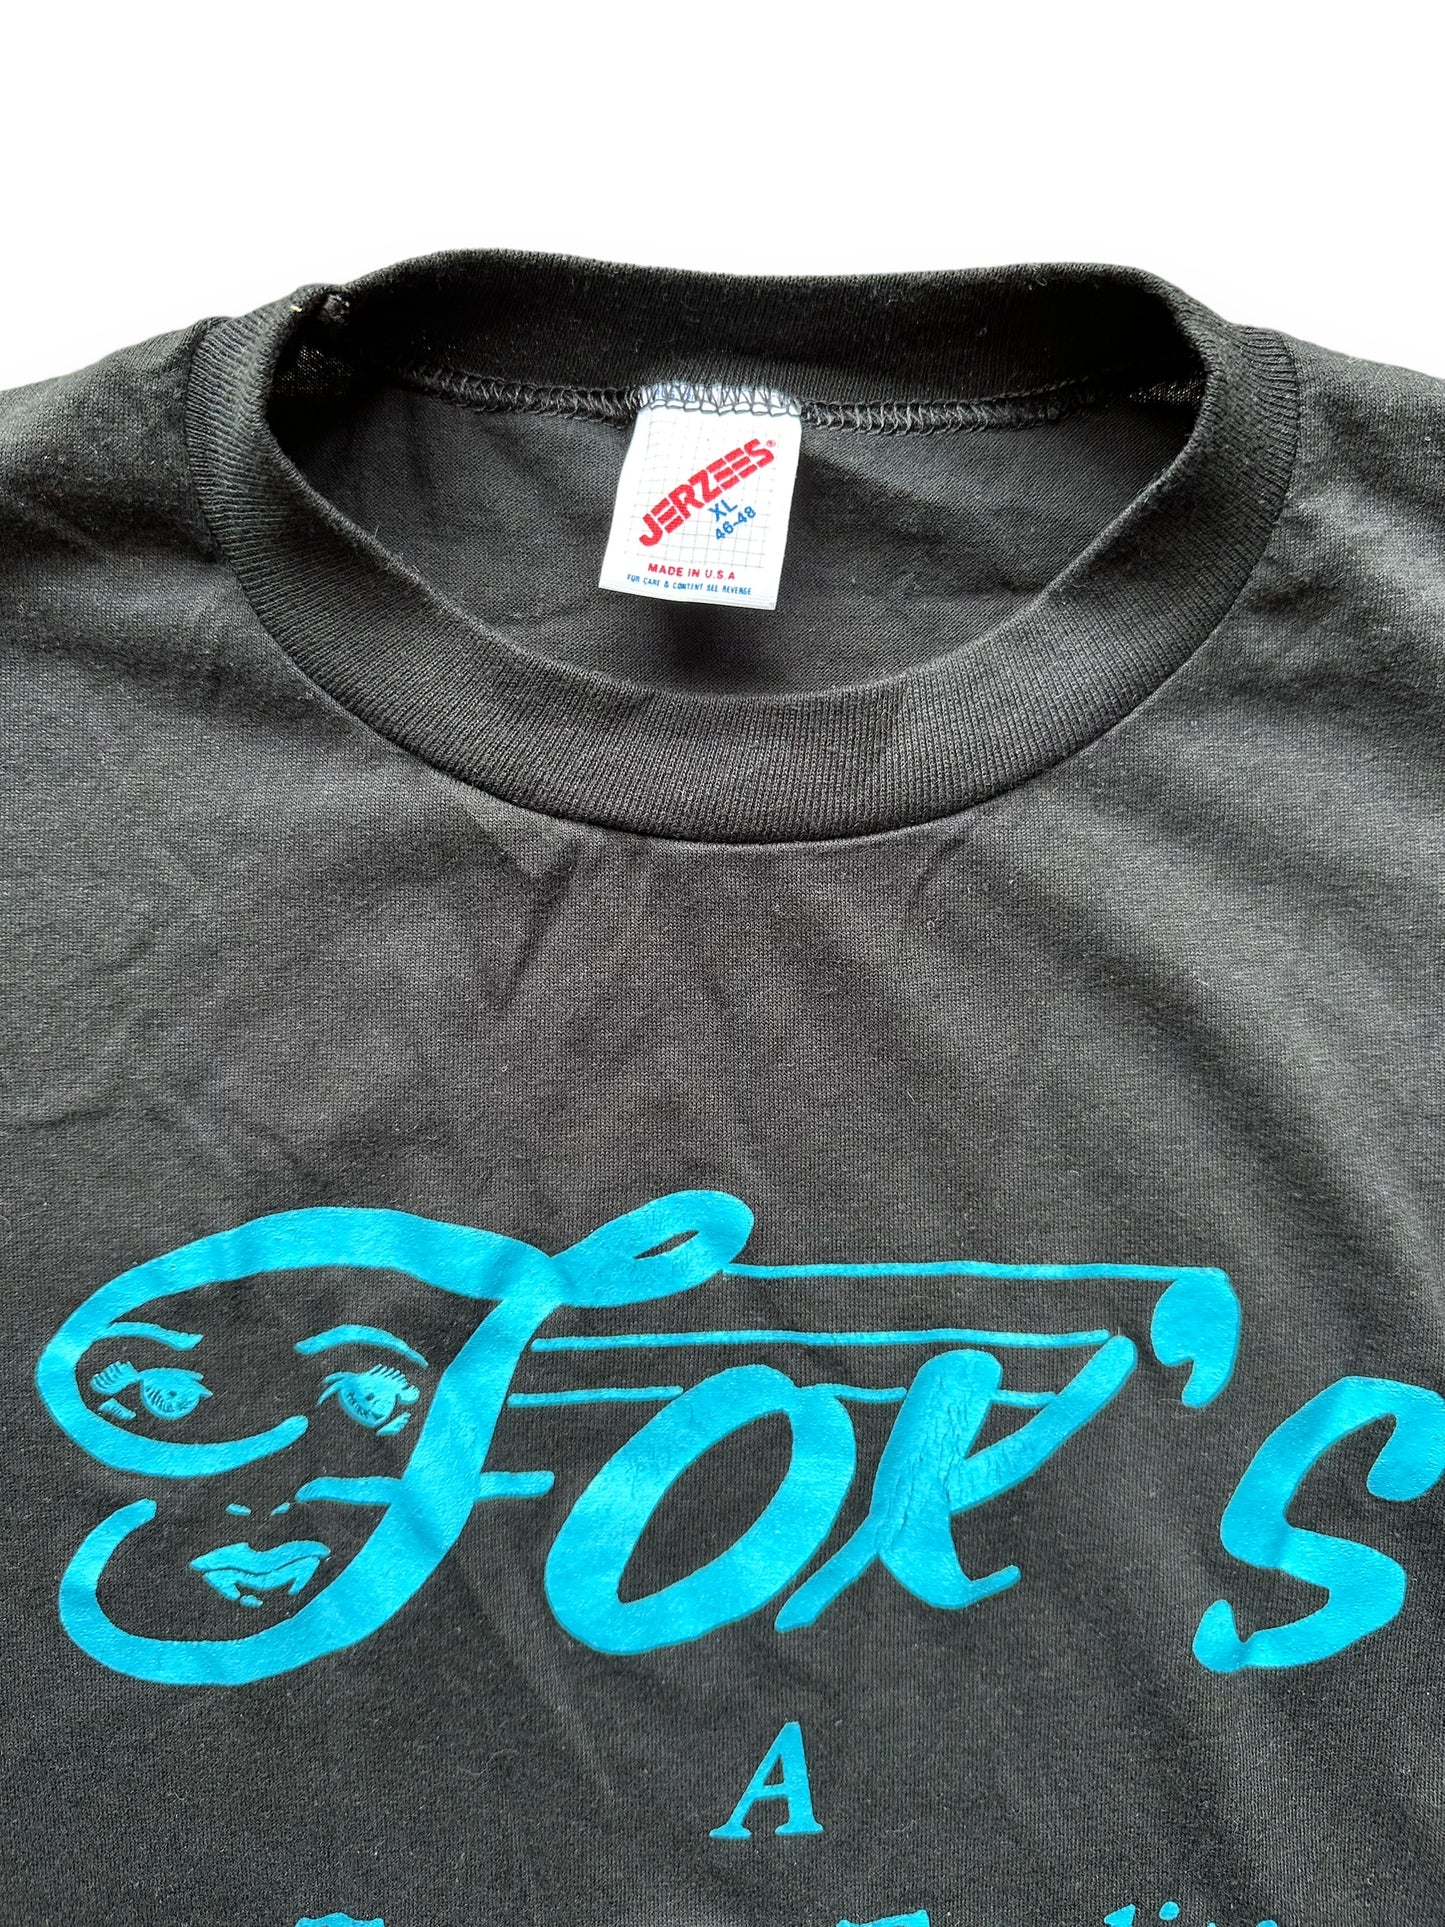 Tag close up of Vintage Fox's Tacoma Tee SZ XL | Vintage Single Stitch T-Shirts Seattle | Barn Owl Vintage Tees Seattle